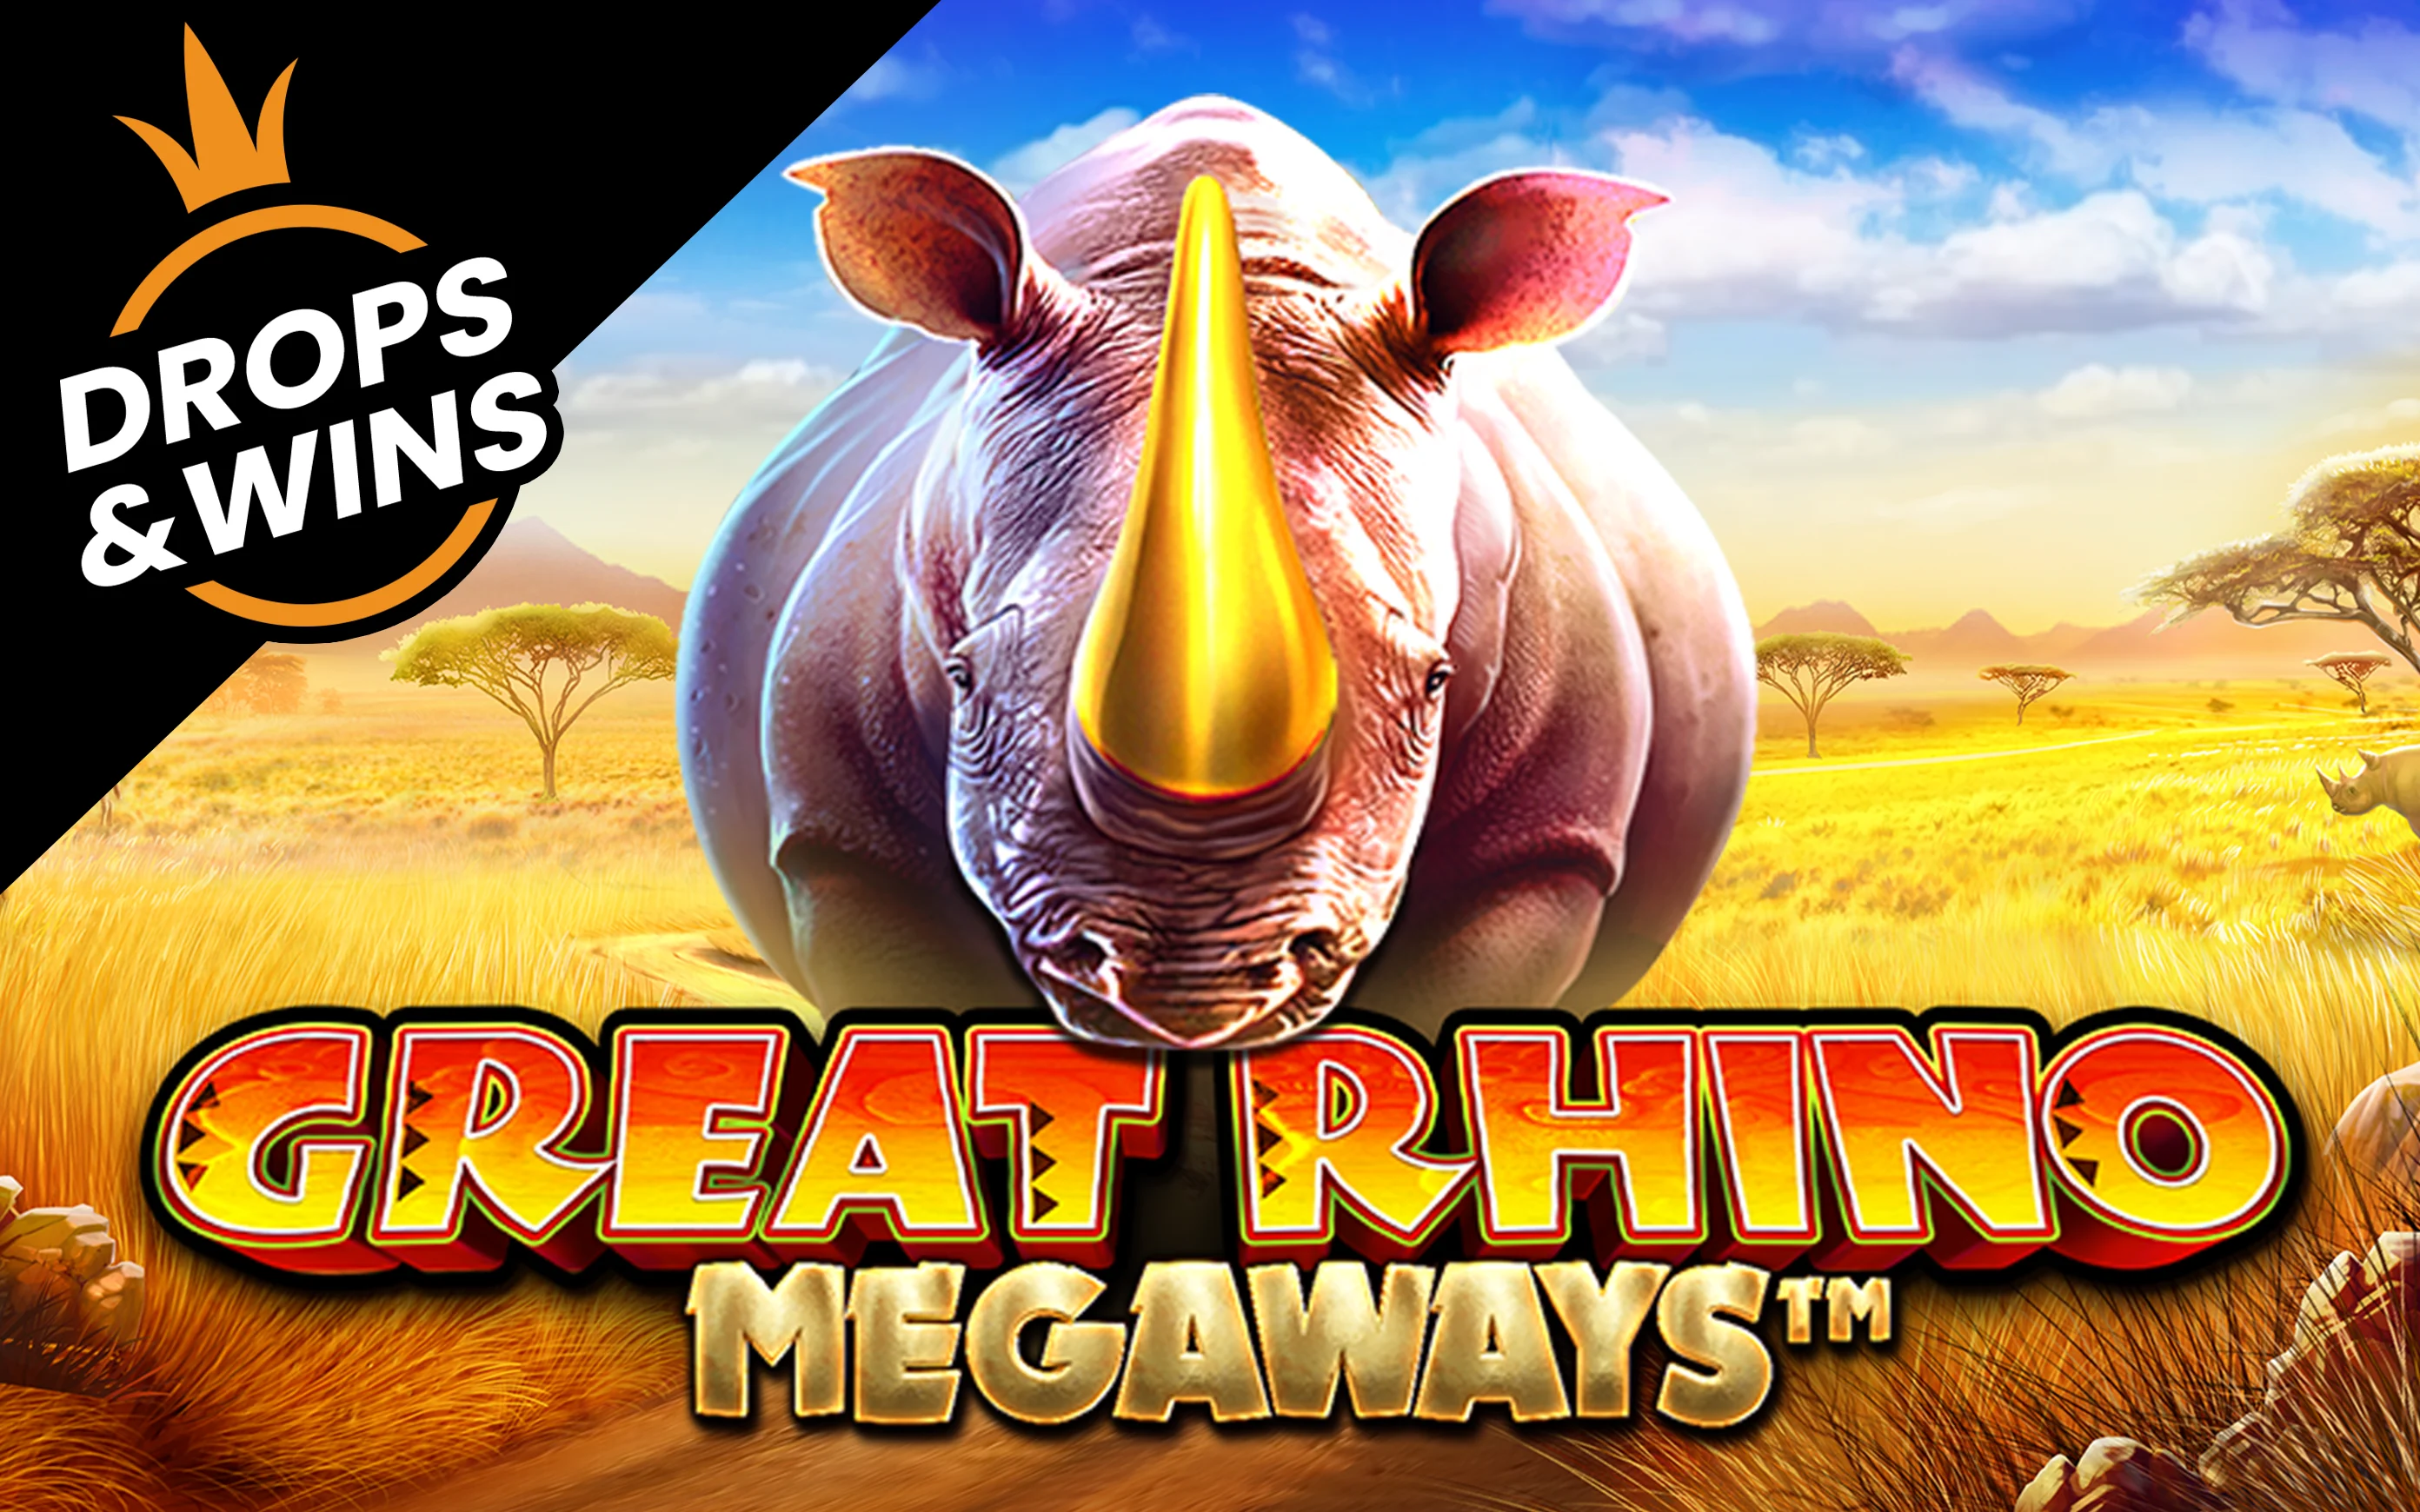 Joacă Great Rhino Megaways™ în cazinoul online Starcasino.be